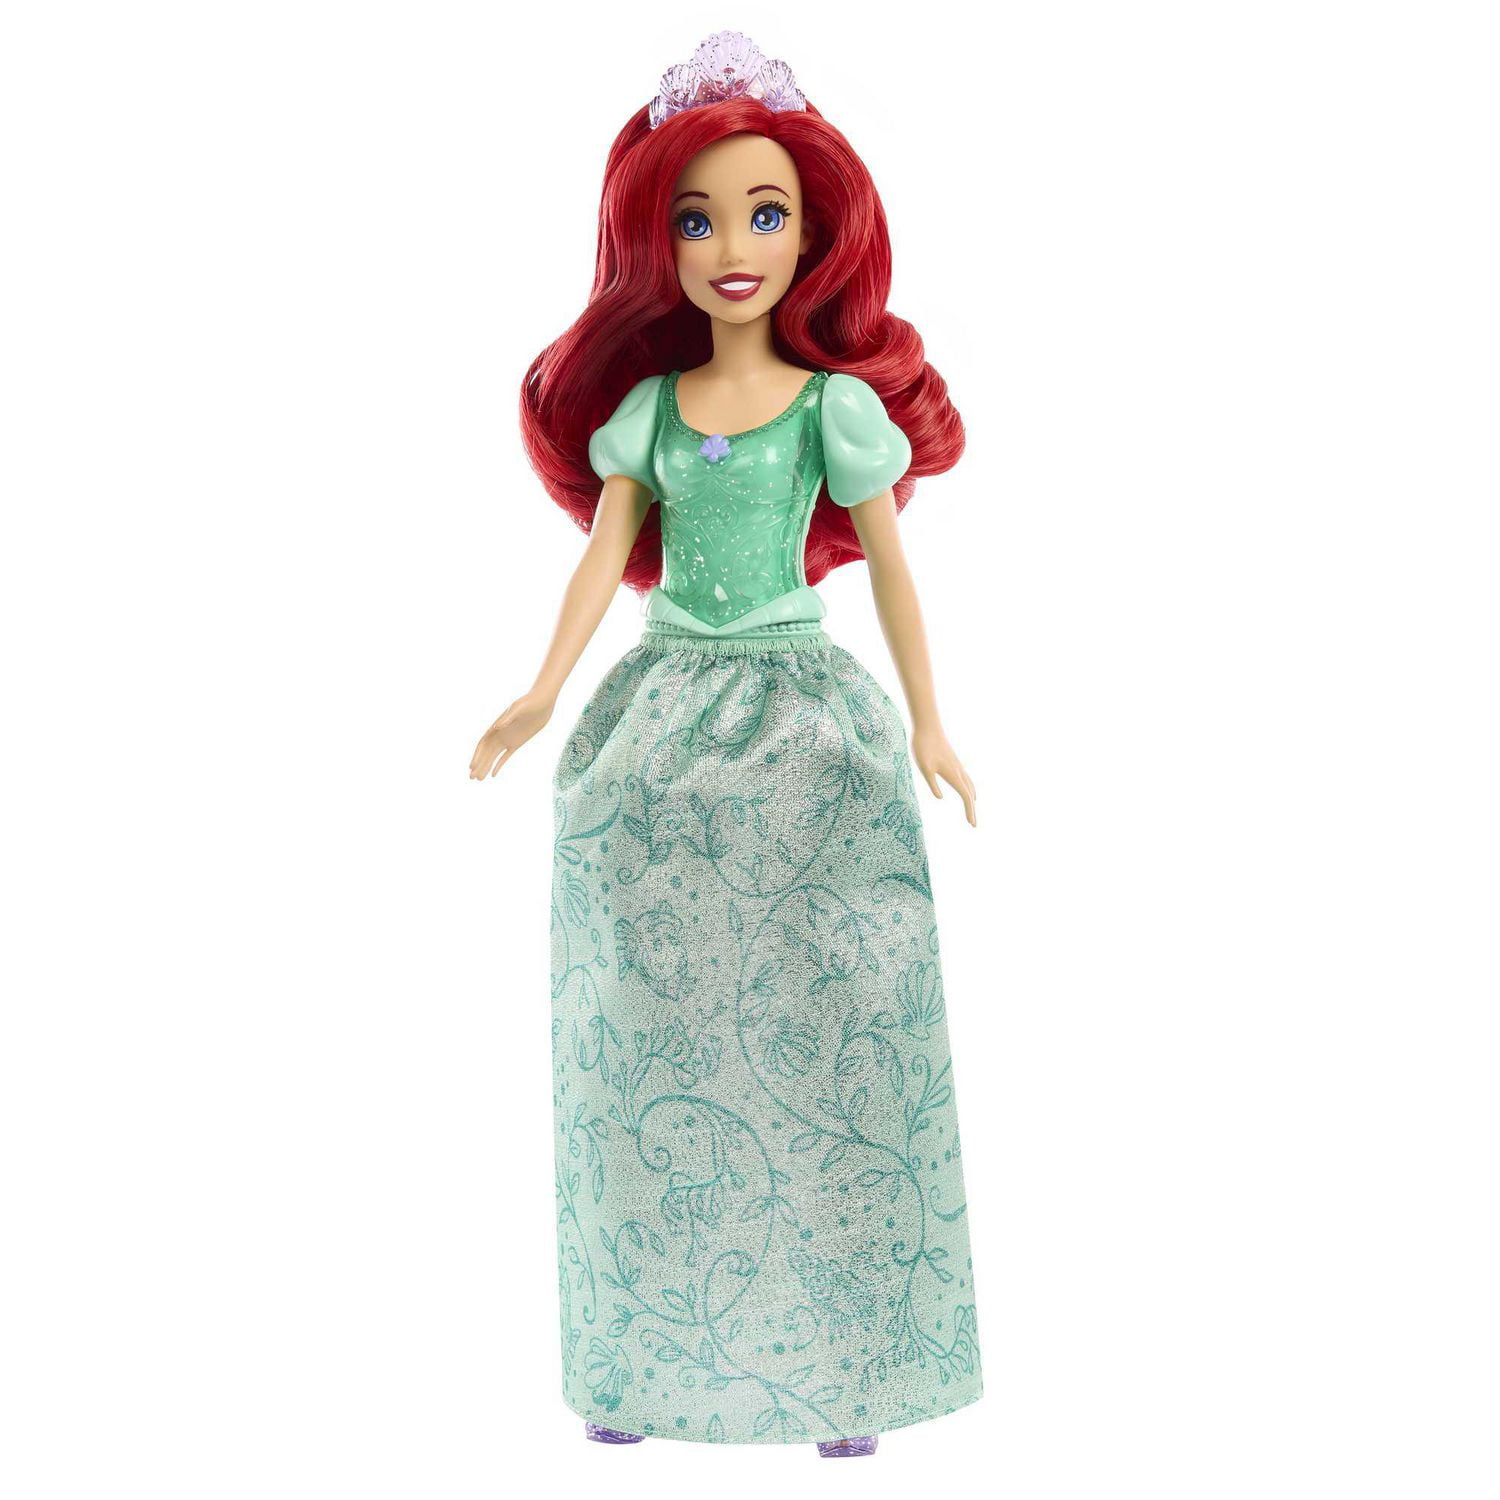  Mattel Ariel The Little Mermaid Doll, Mermaid Fashion